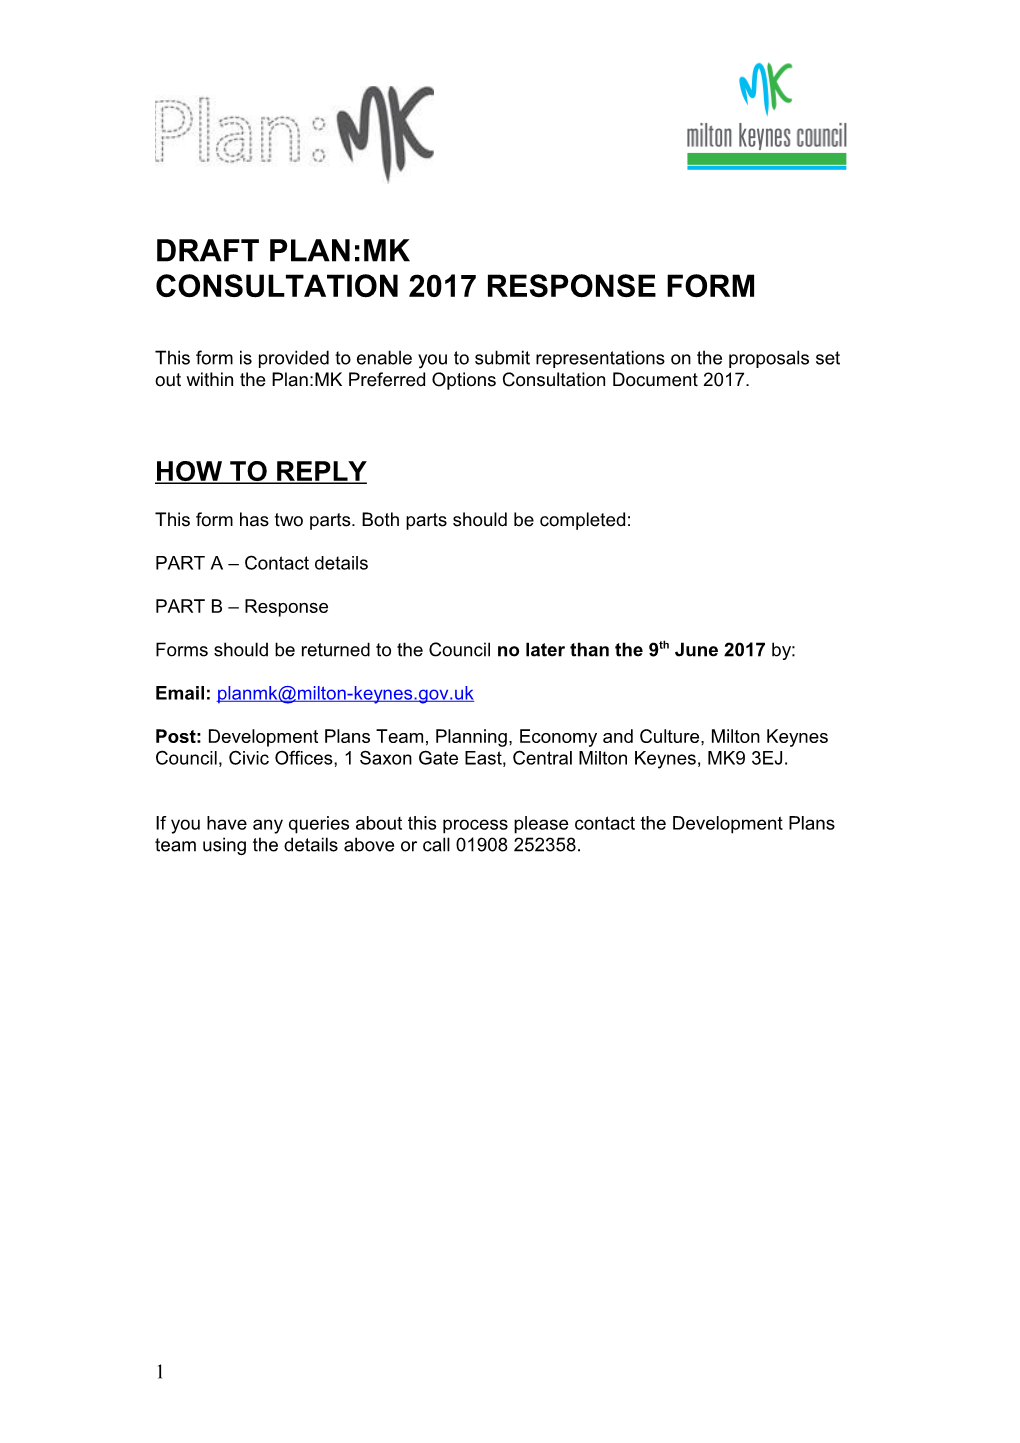 Consultation 2017 Response Form